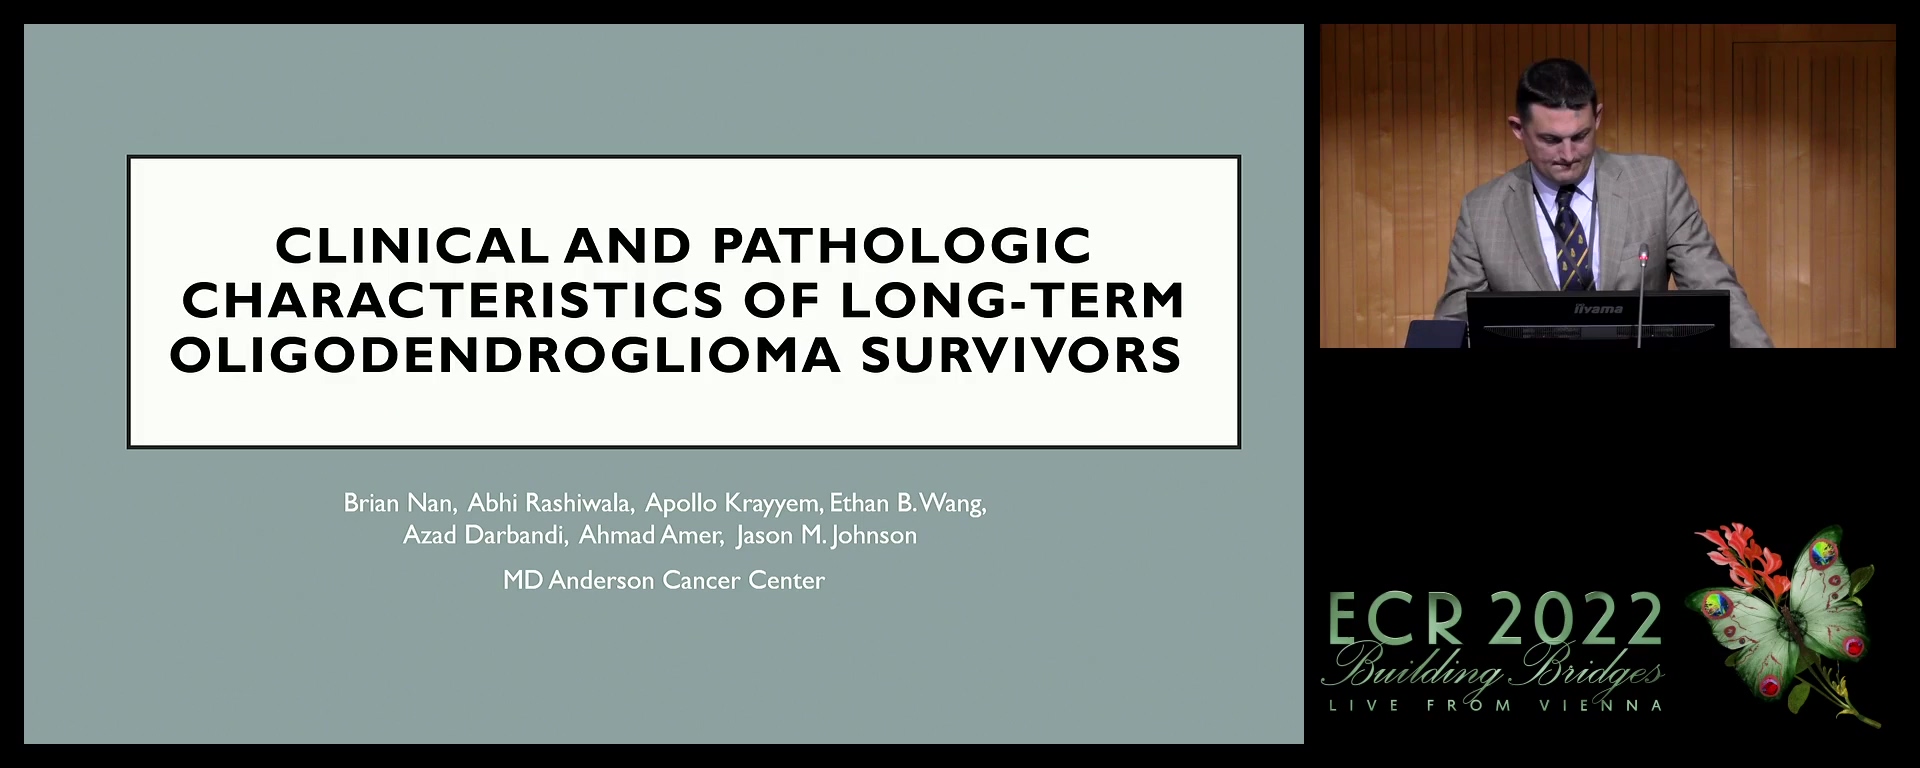 Clinical and pathologic characteristics of long-term oligodendroglioma survivors